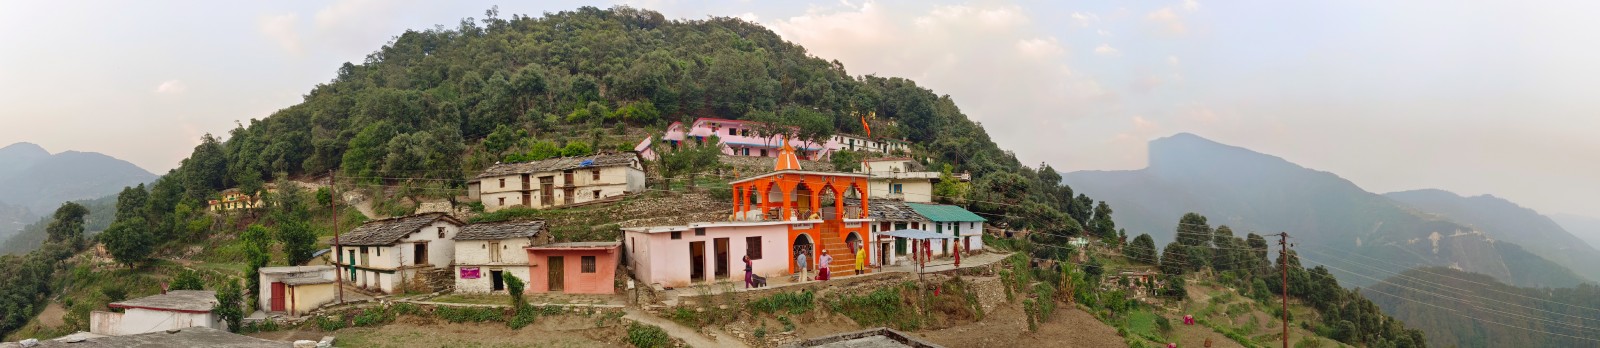 Malla village, Chamoli